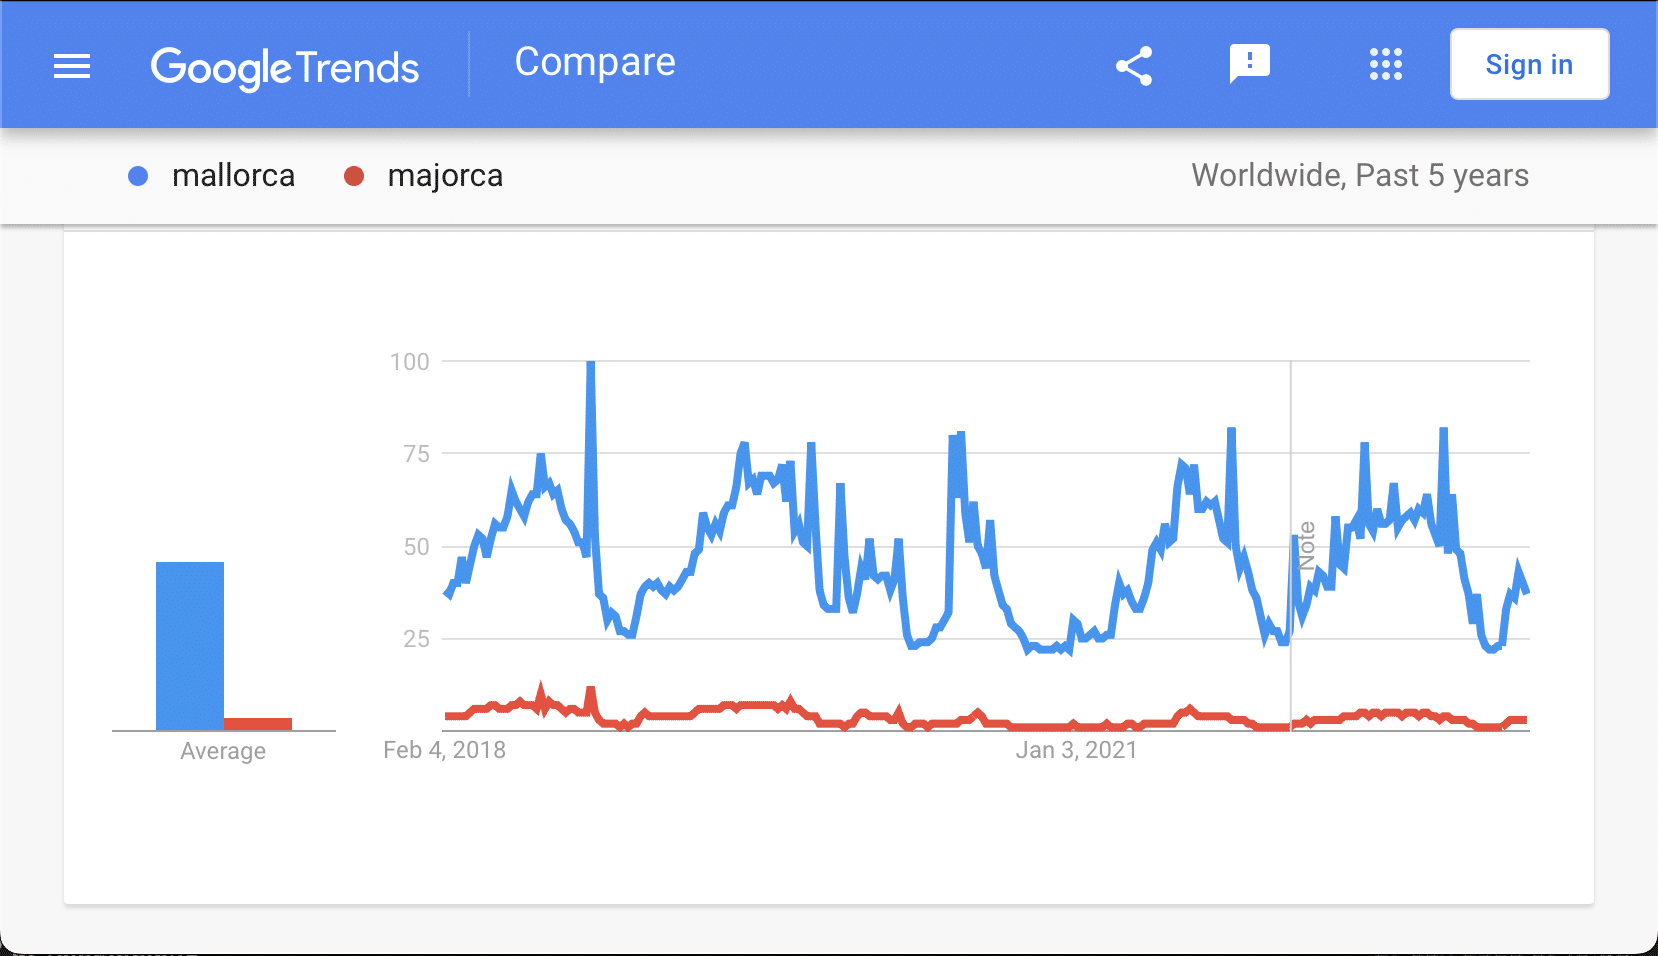 5. Google Trends mallorca vs majorca Worldwide past 5 years